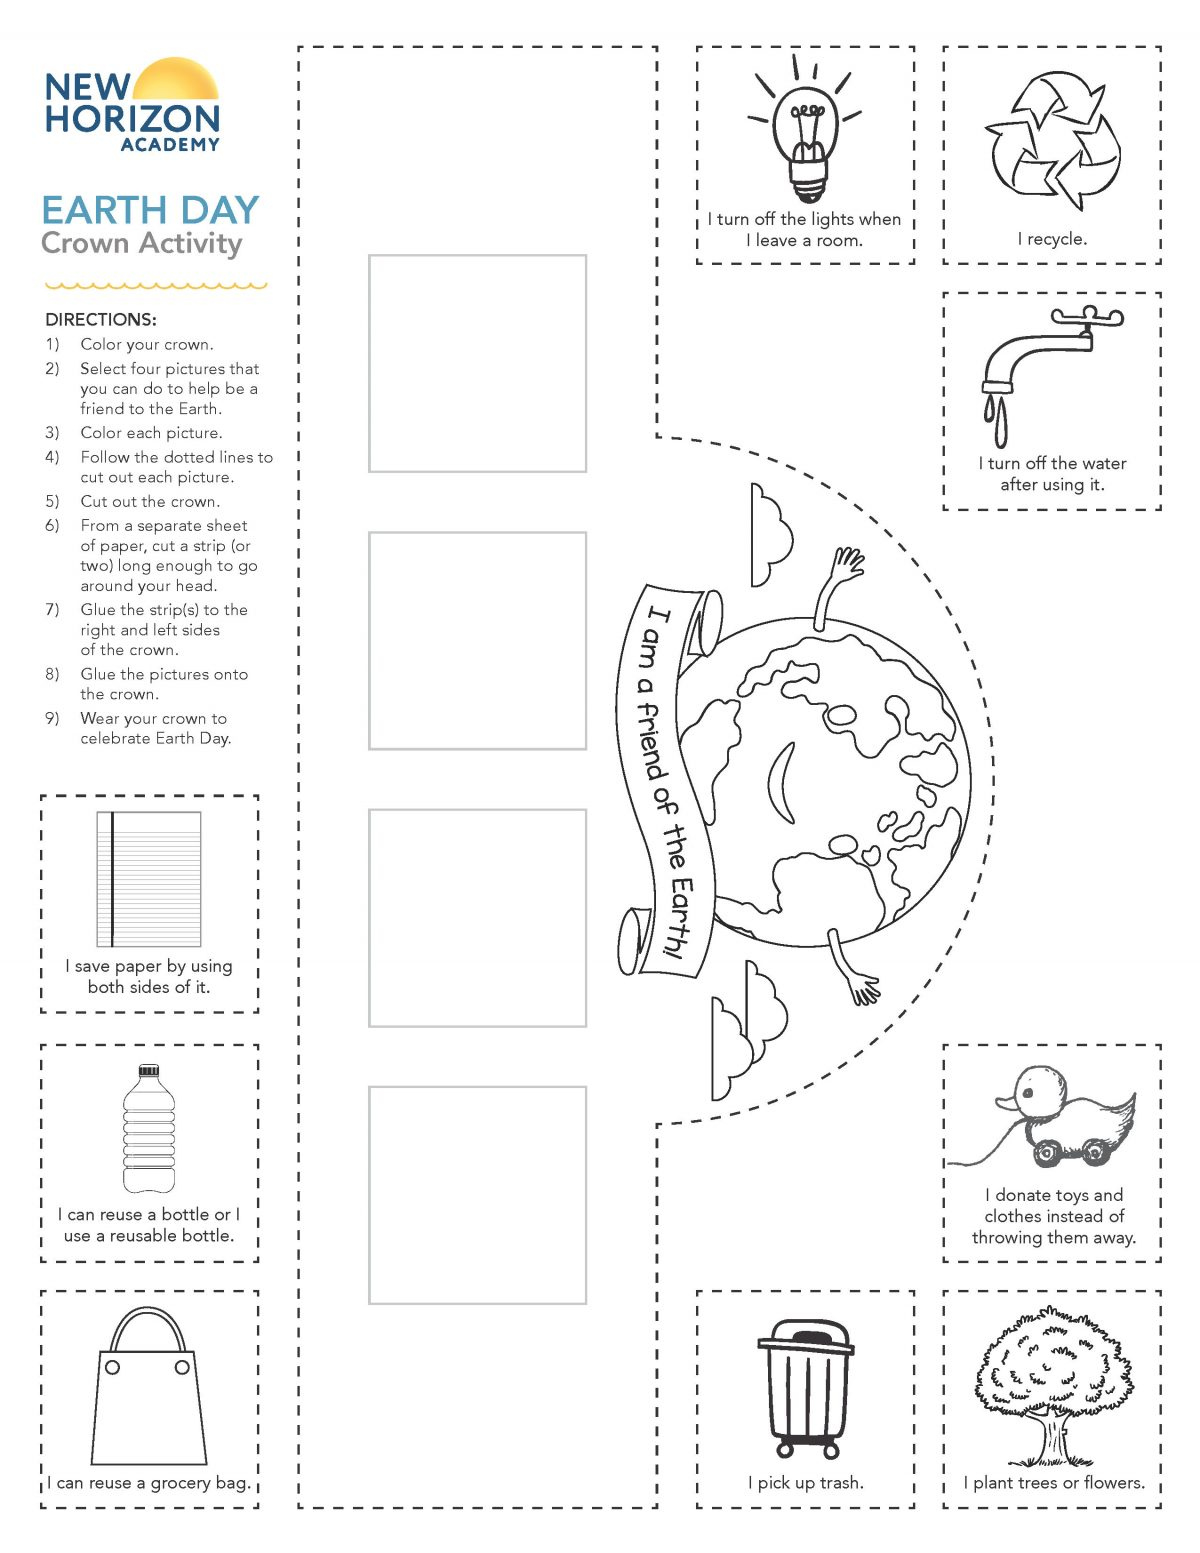 4 Fun Earth Day Activities For Kids New Horizon Academy